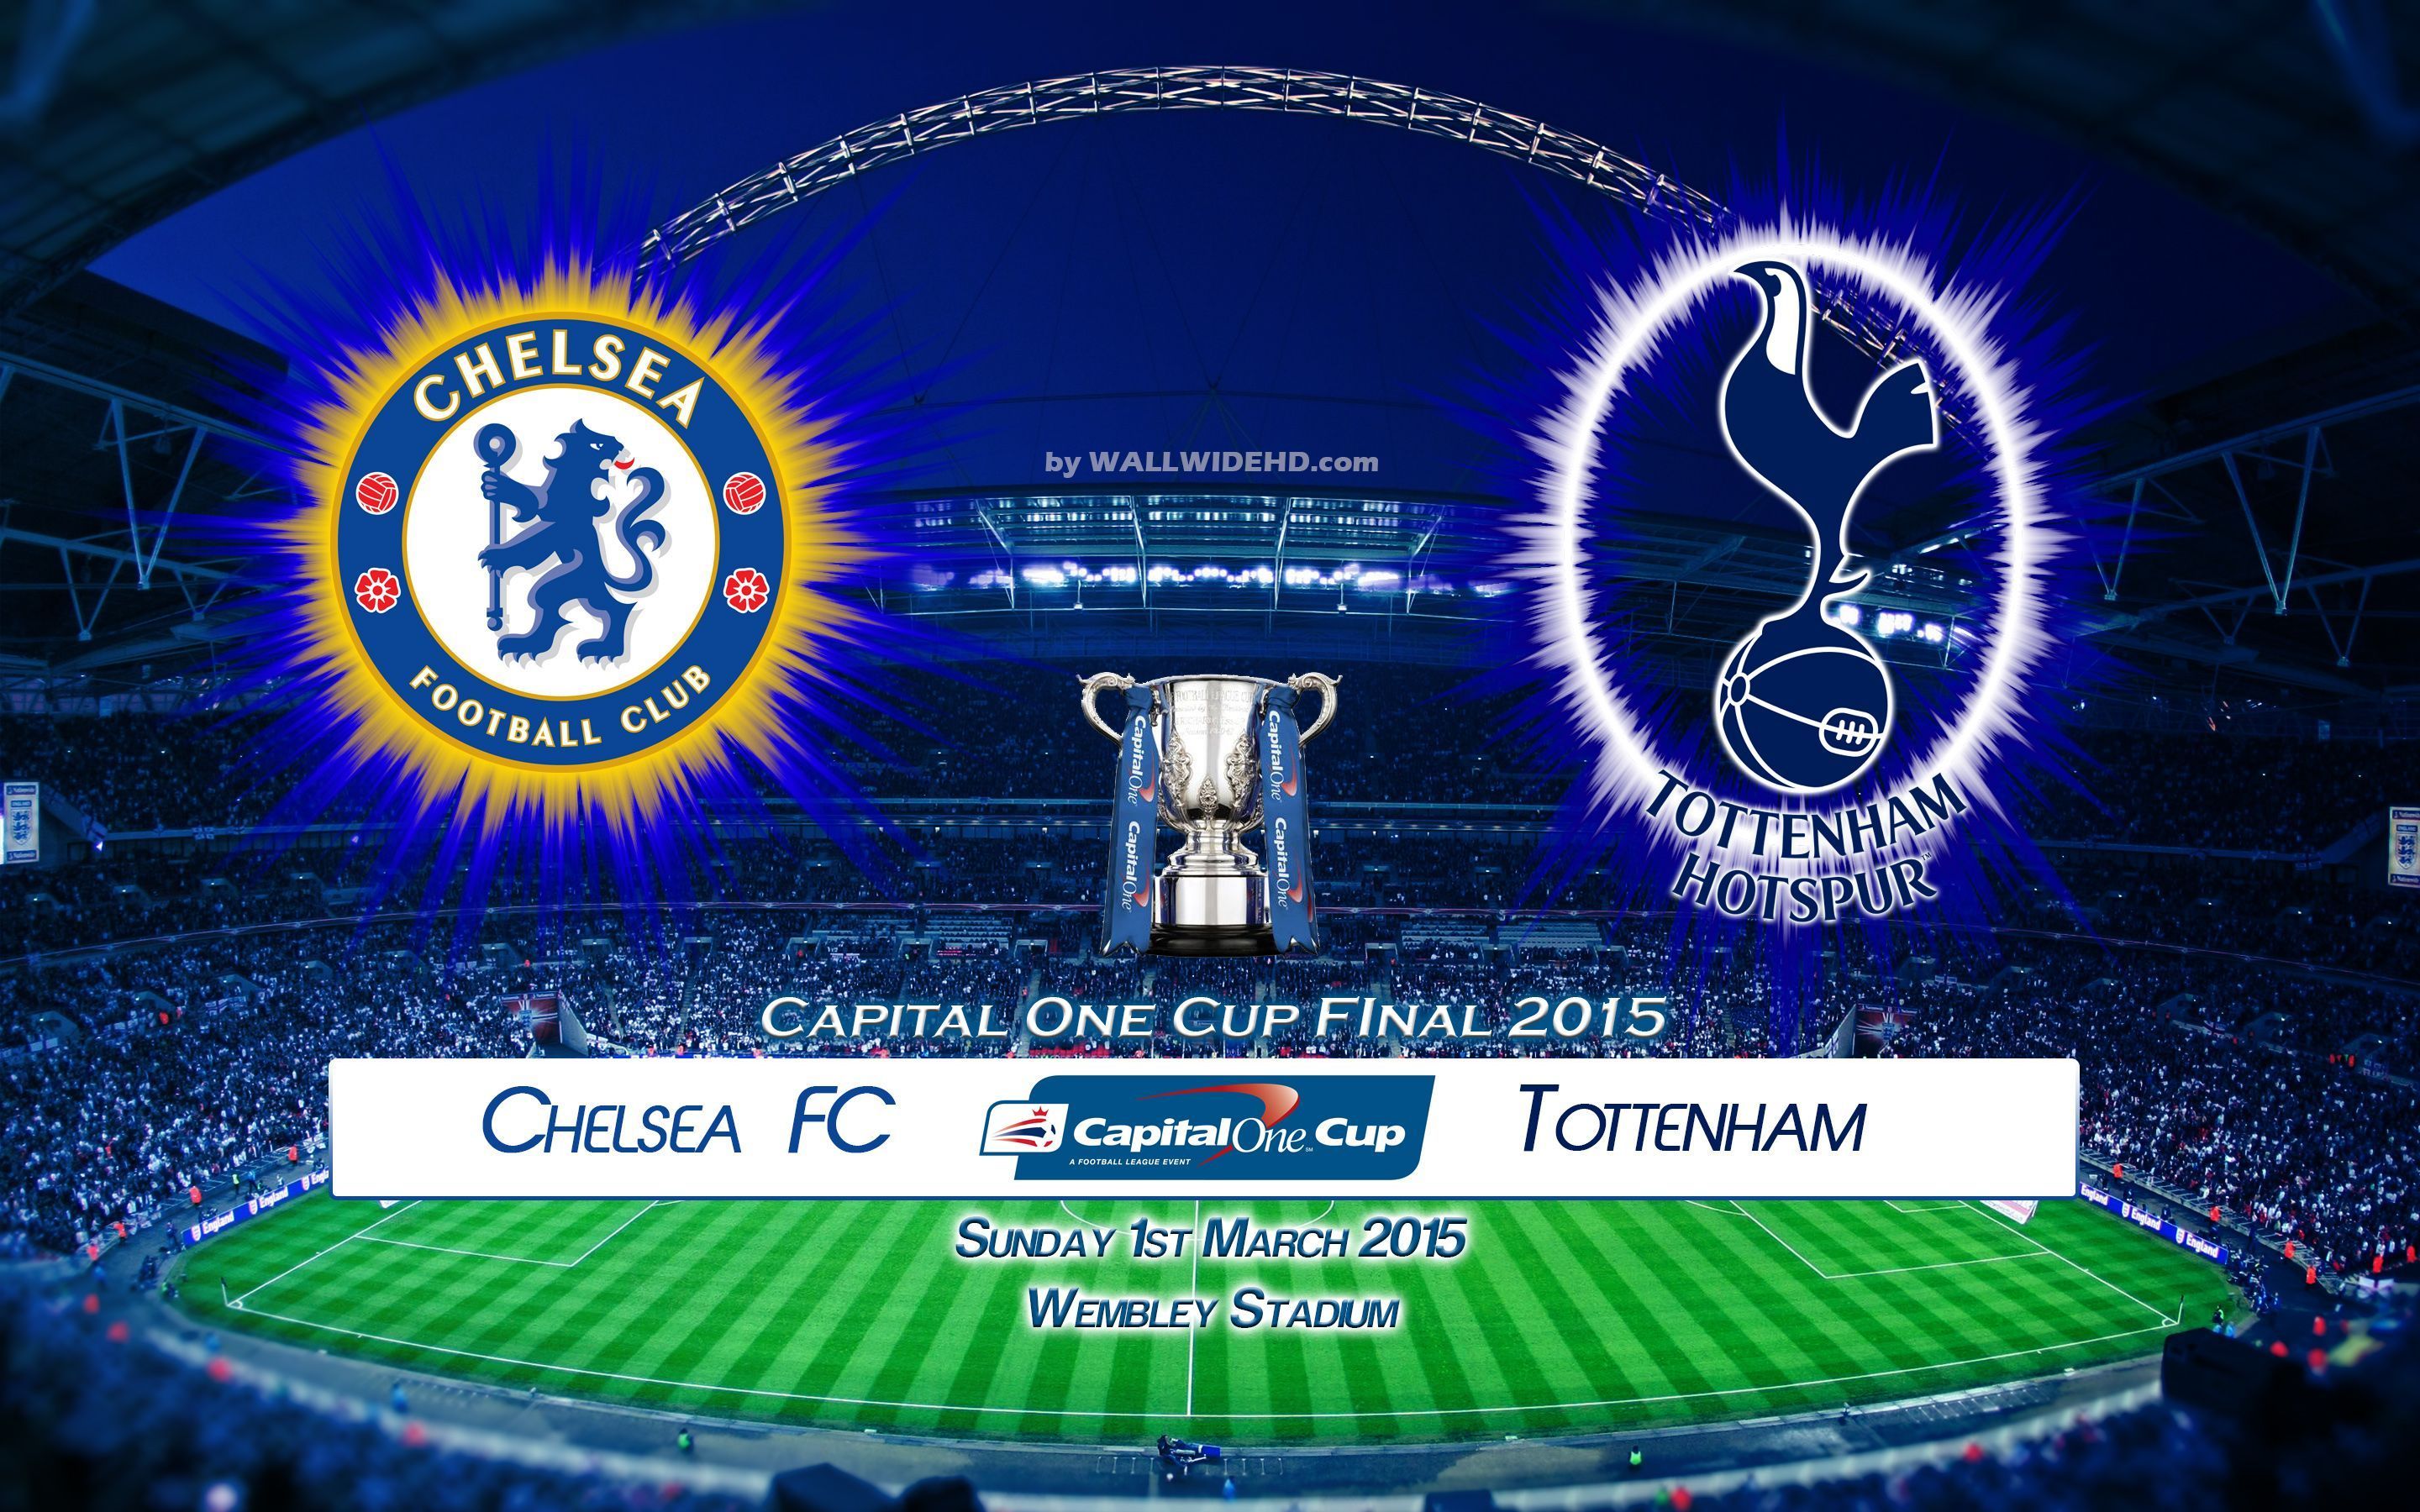 Chelsea-FC-vs-Tottenham-Hotspur-2015-Capital-One-Cup-Final-Wallpaper.jpg